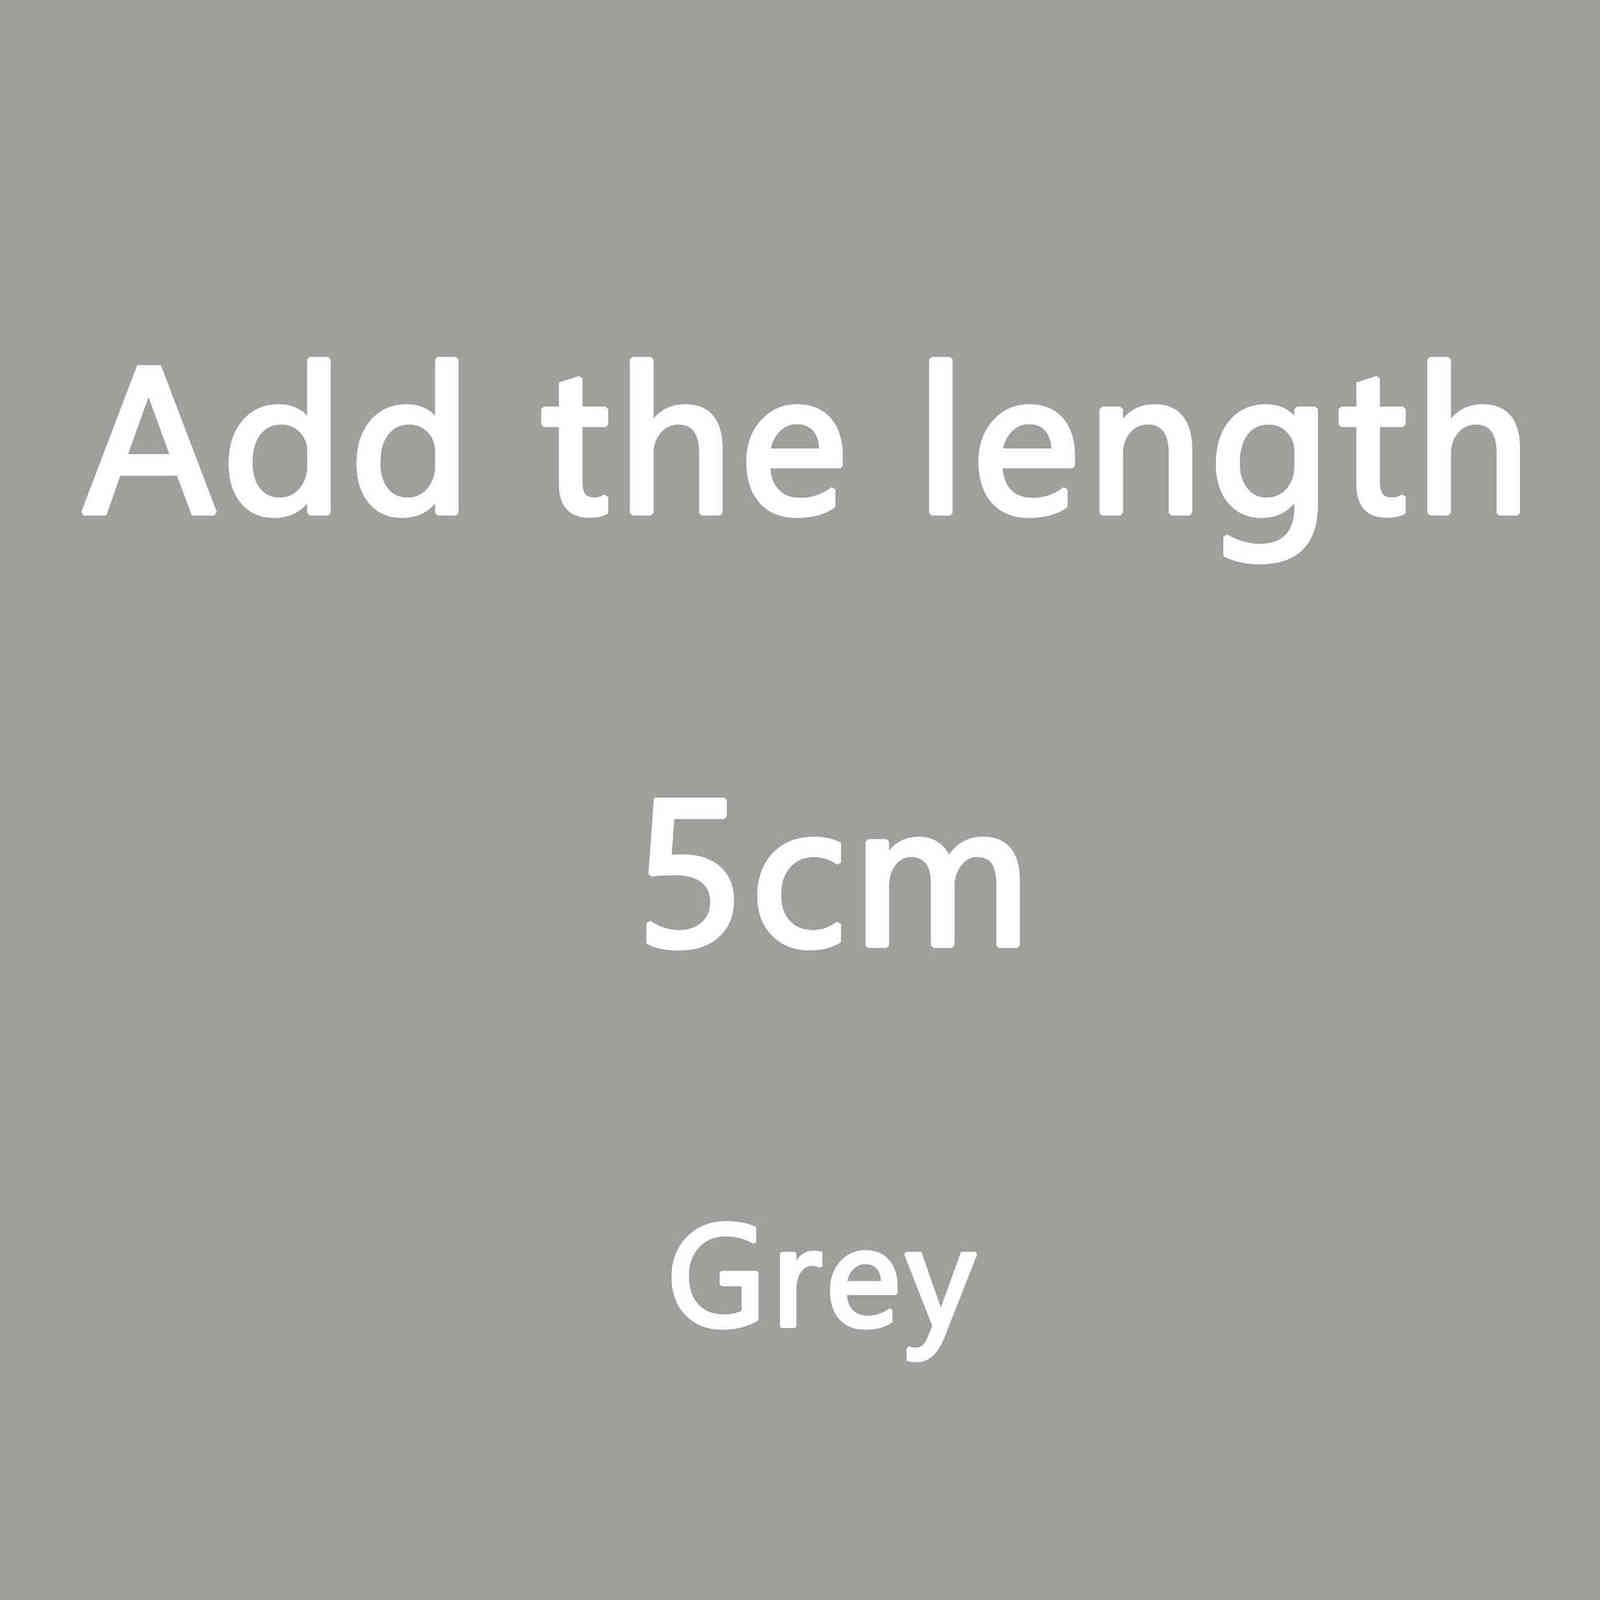 Add the Length 5cm